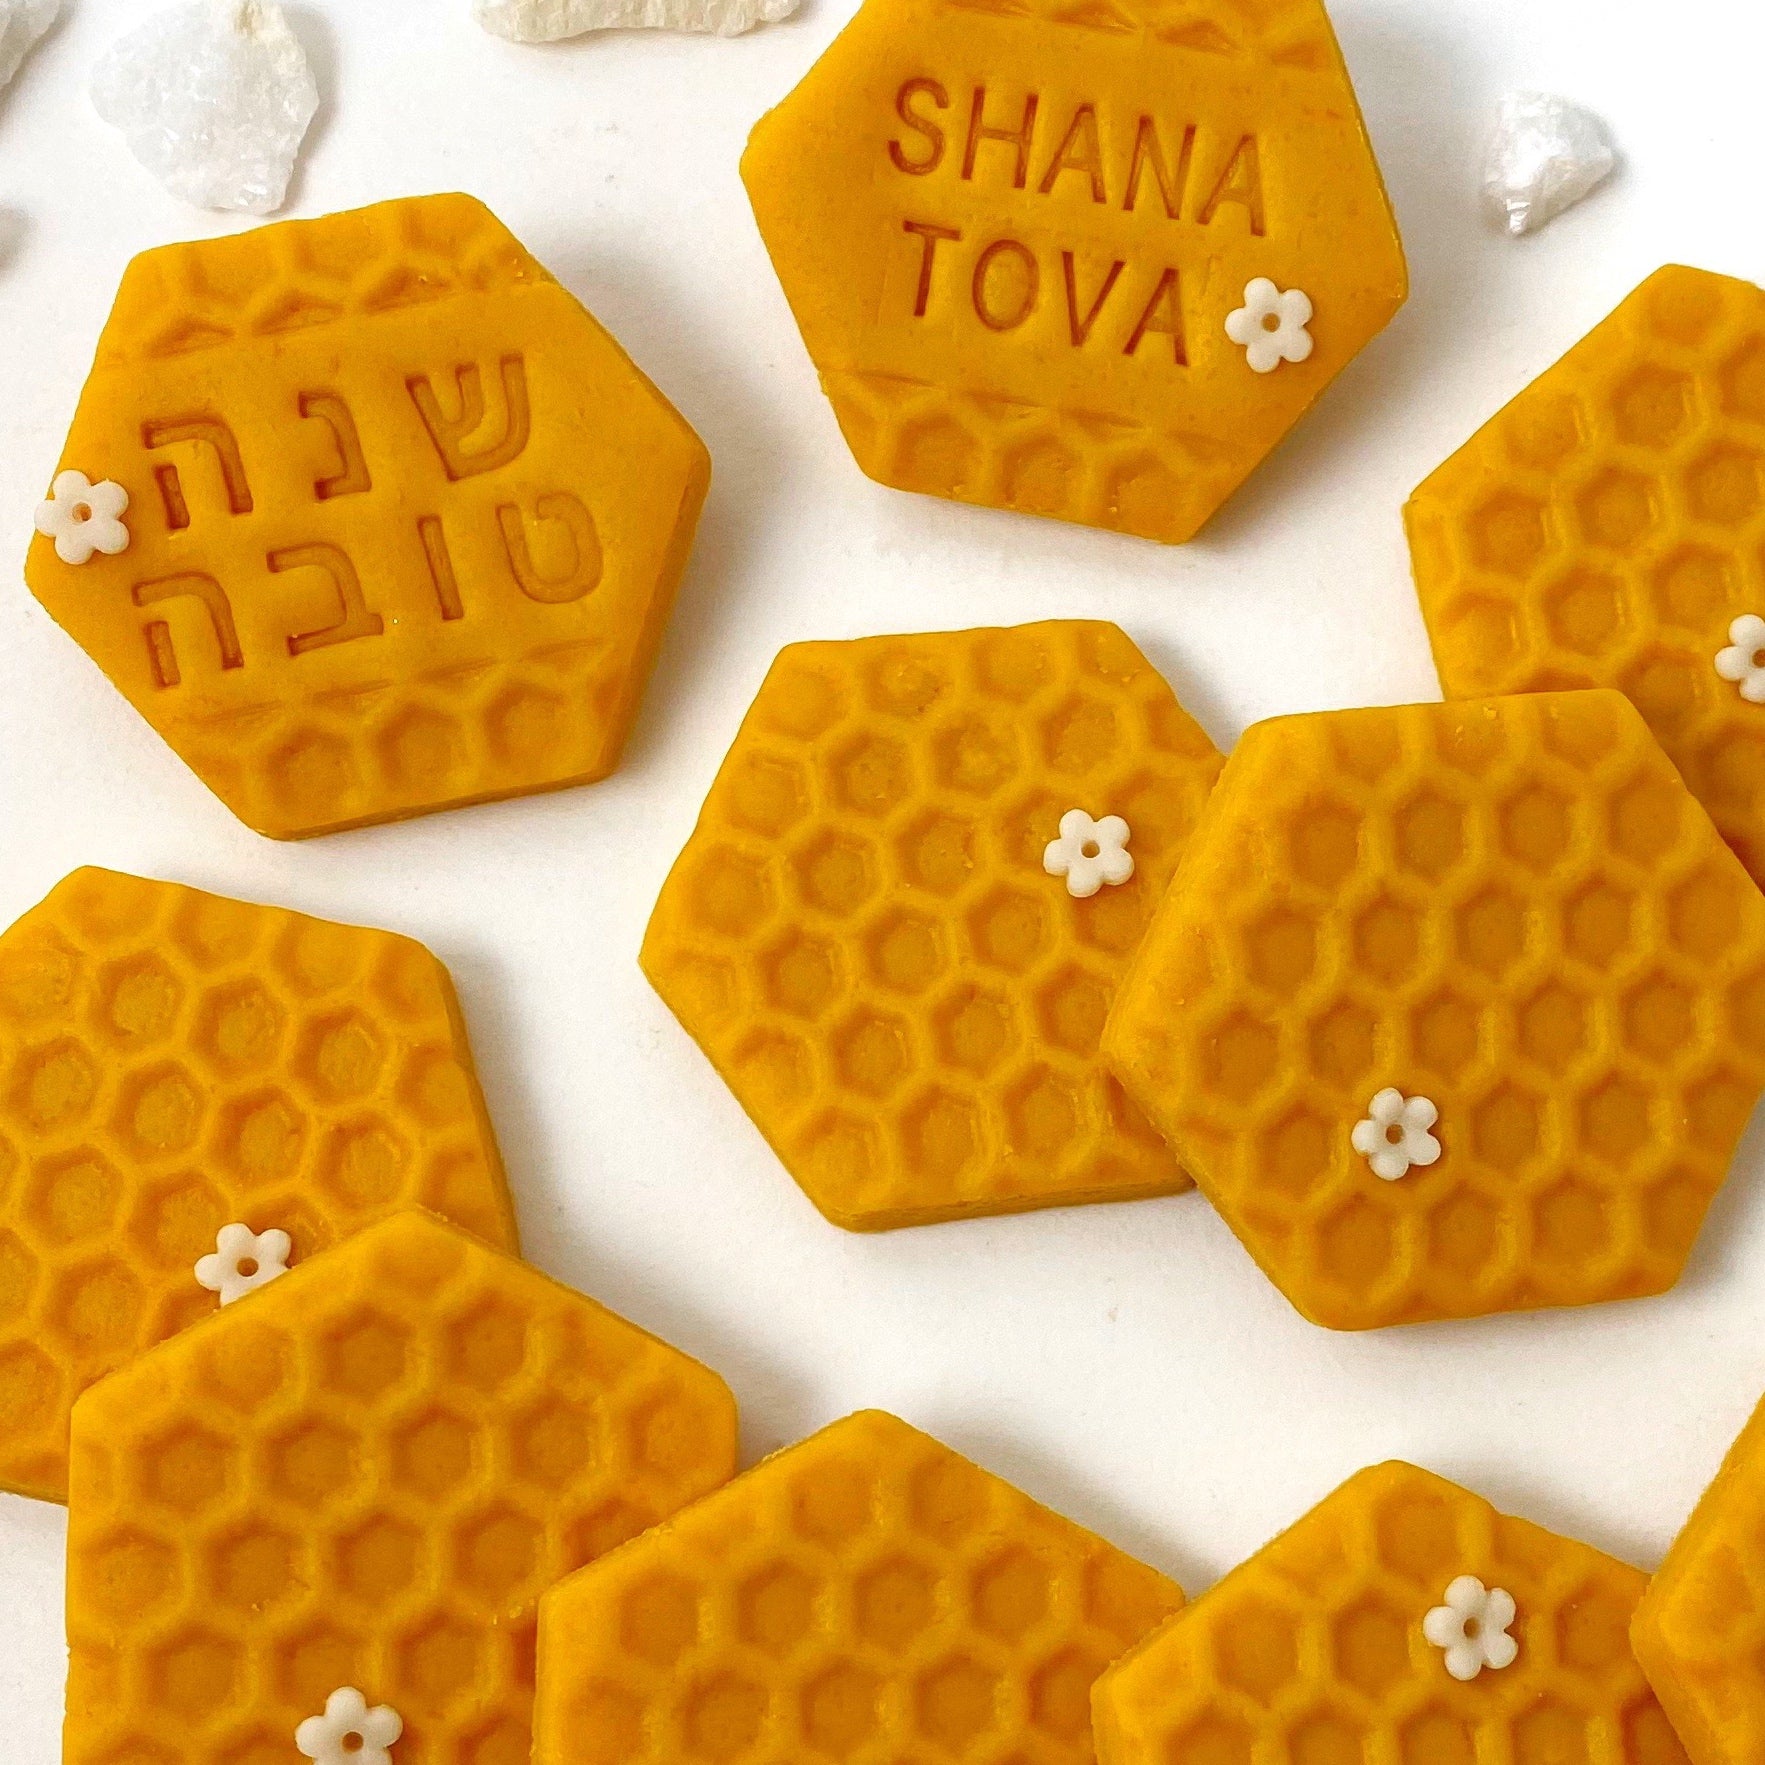 hebrew english rosh hashanah shana tova greetings marzipan candy tiles closeup